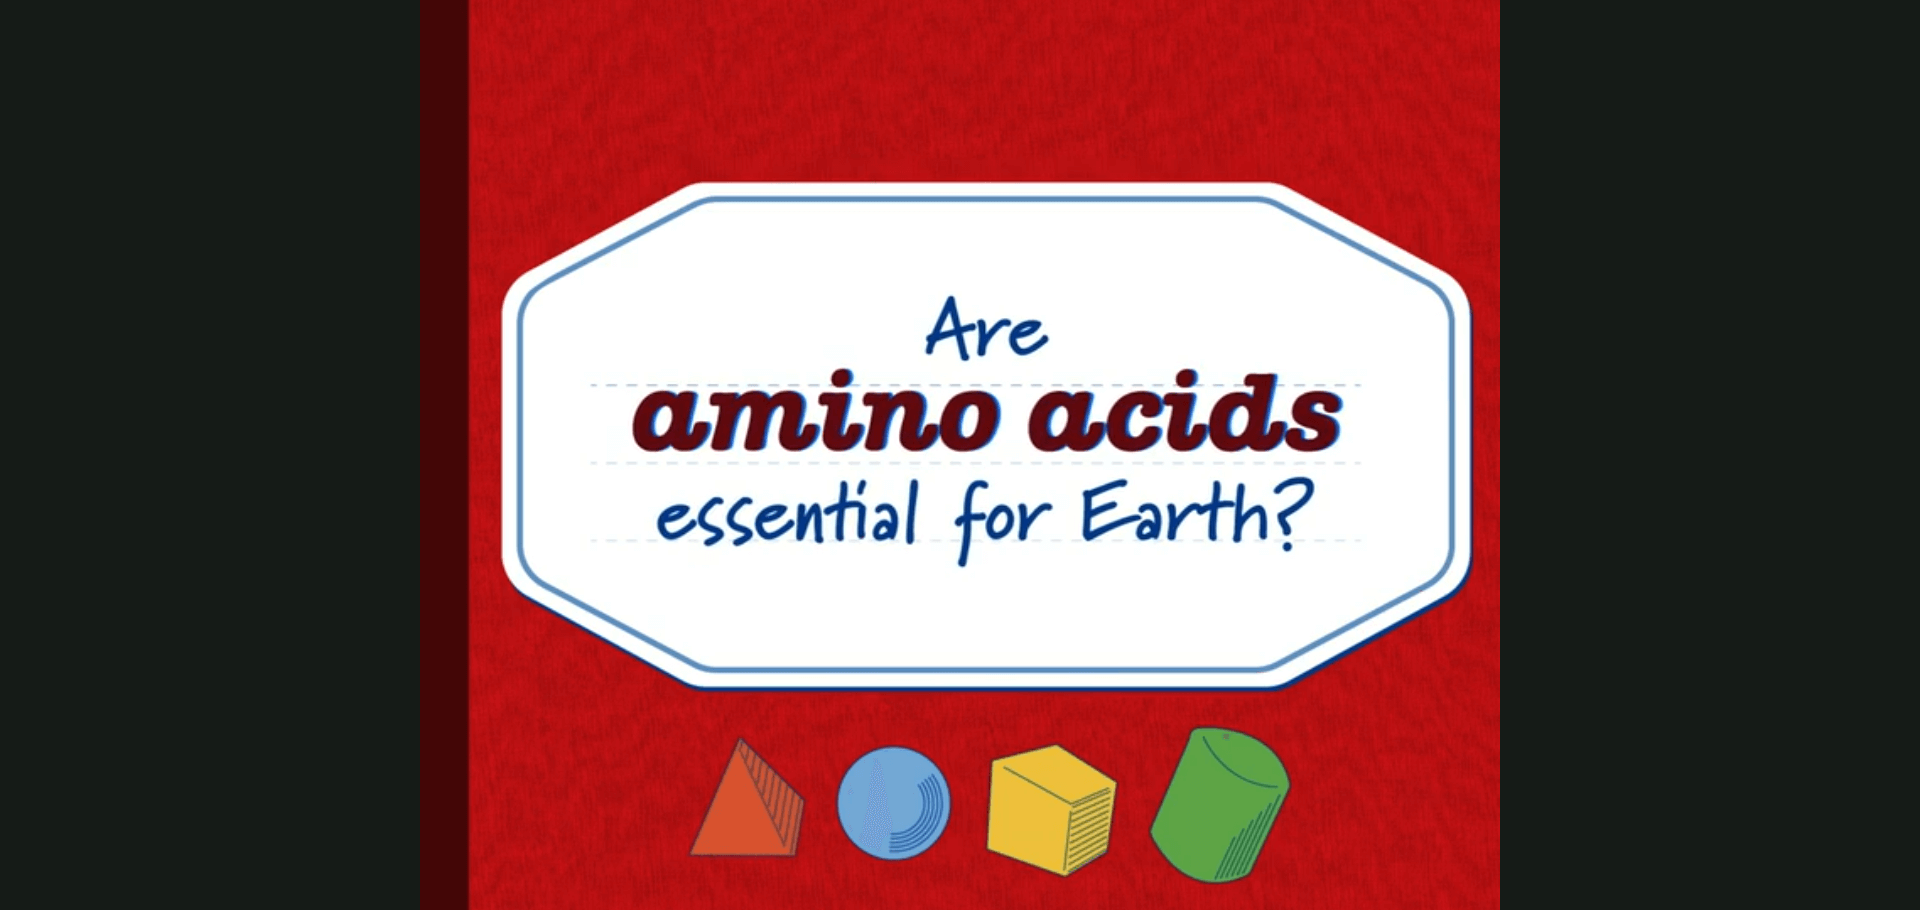 Are amino acids essential for Earth?